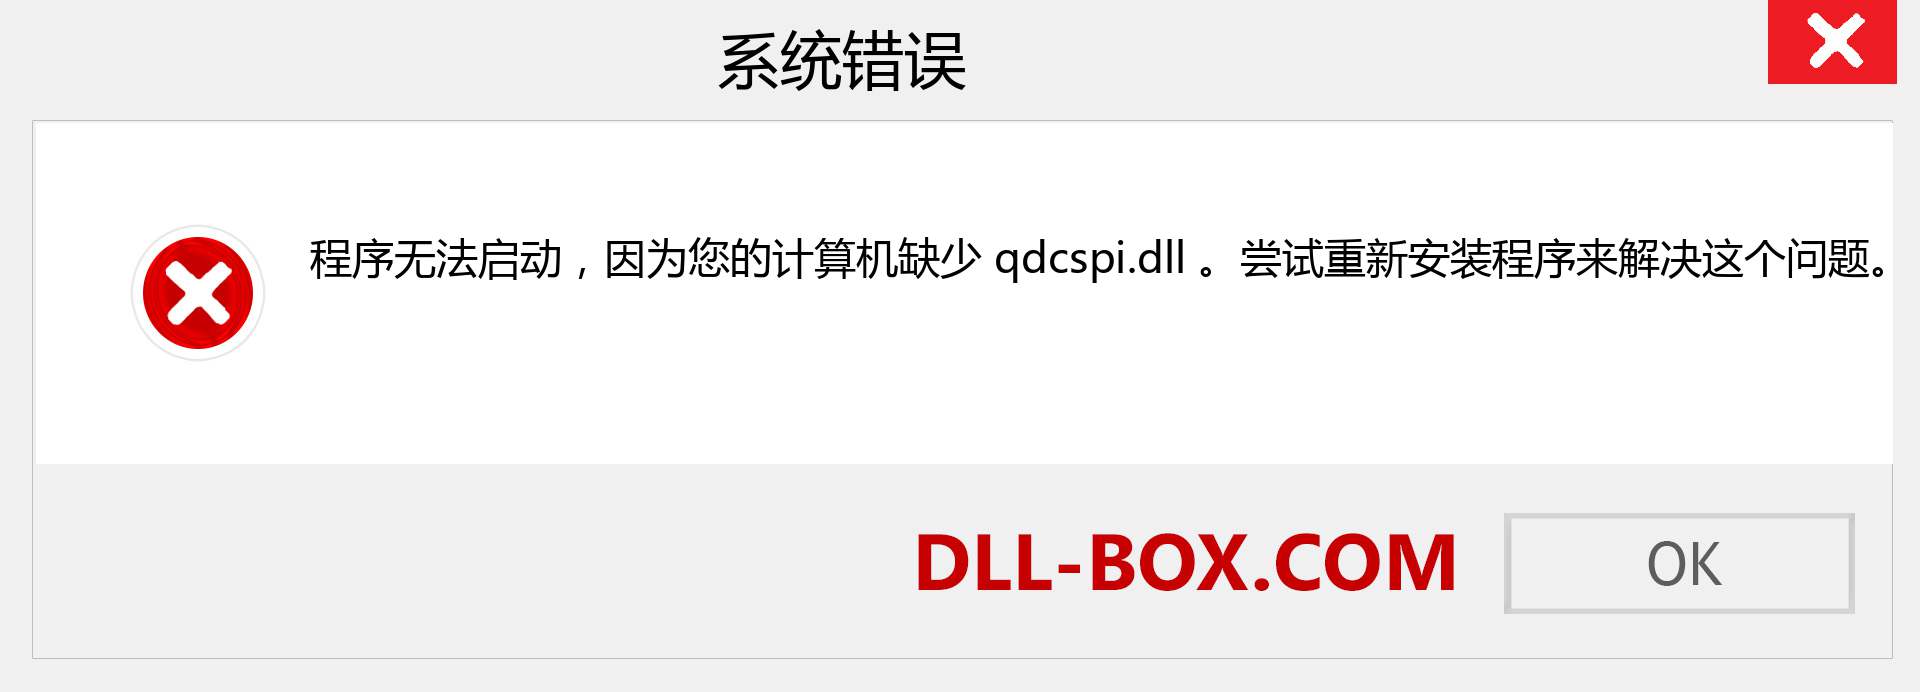 qdcspi.dll 文件丢失？。 适用于 Windows 7、8、10 的下载 - 修复 Windows、照片、图像上的 qdcspi dll 丢失错误